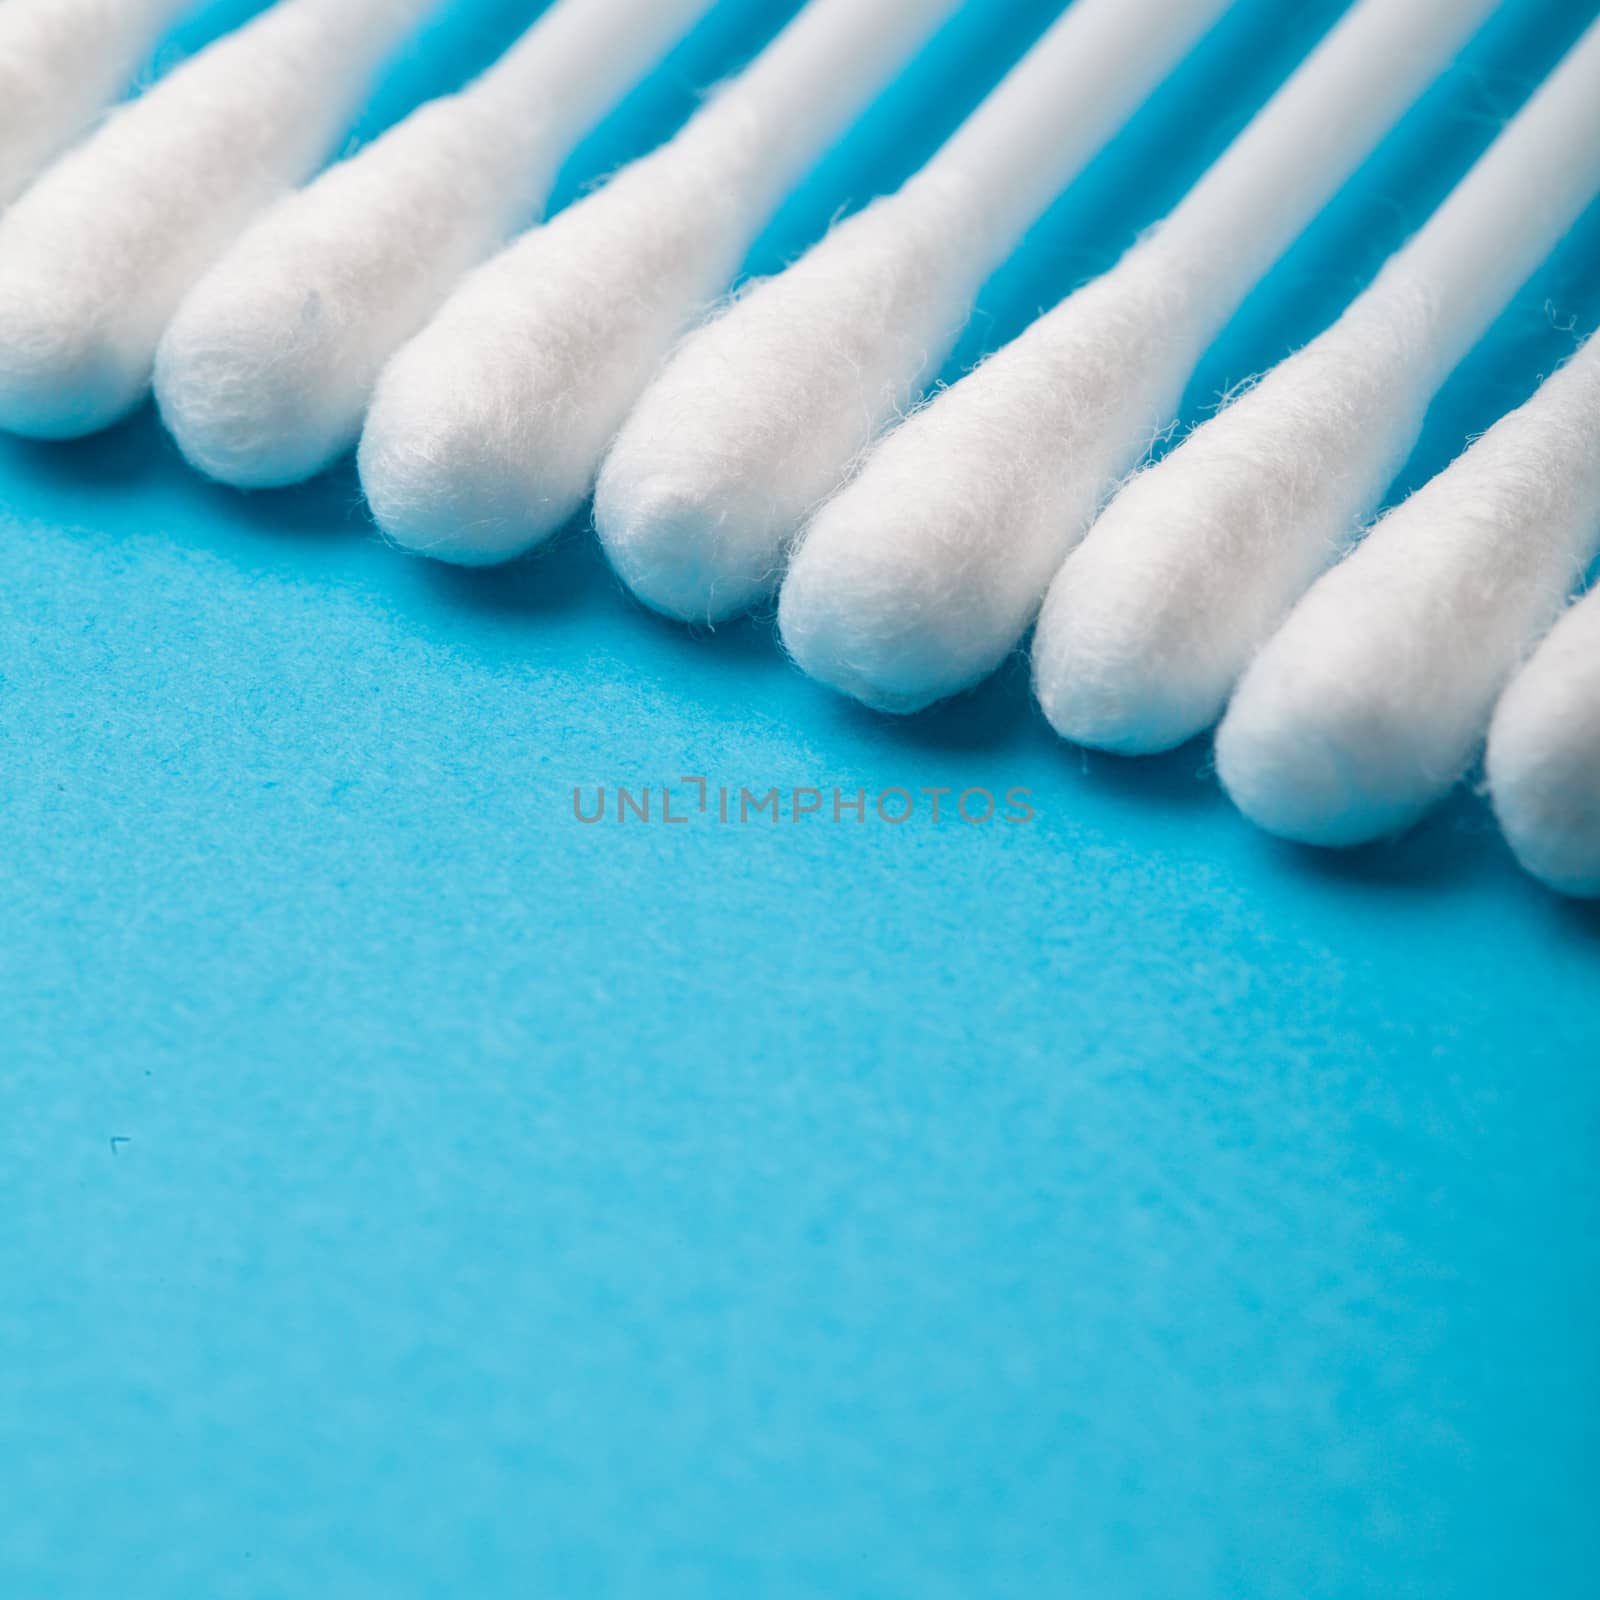 White cotton sticks by oksix